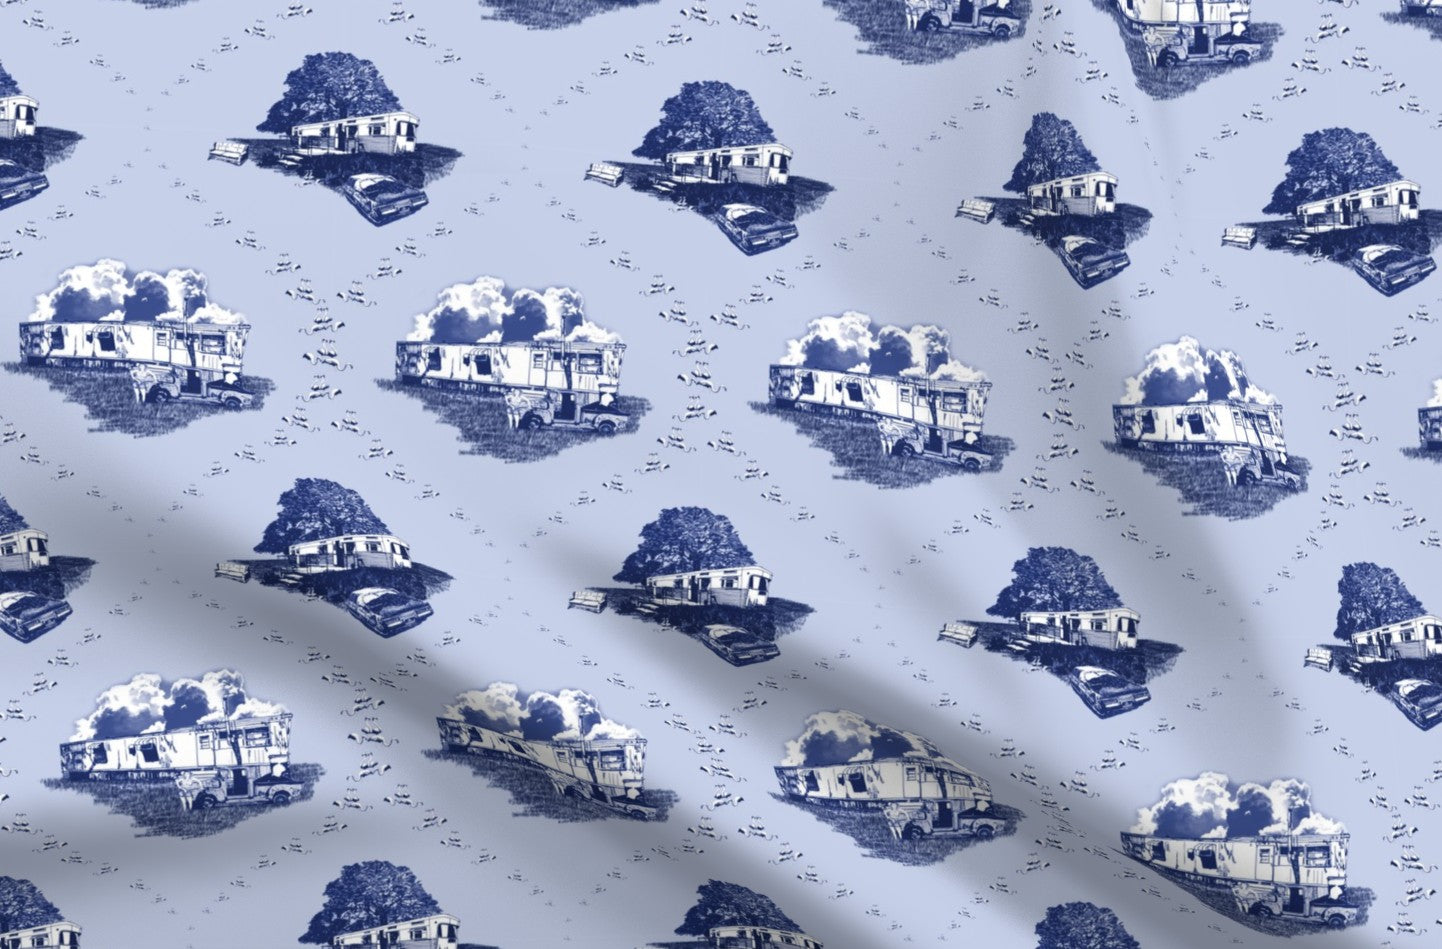 Trailer Trash Toile Blue (Smaller) Printed Fabric by Studio Ten Design